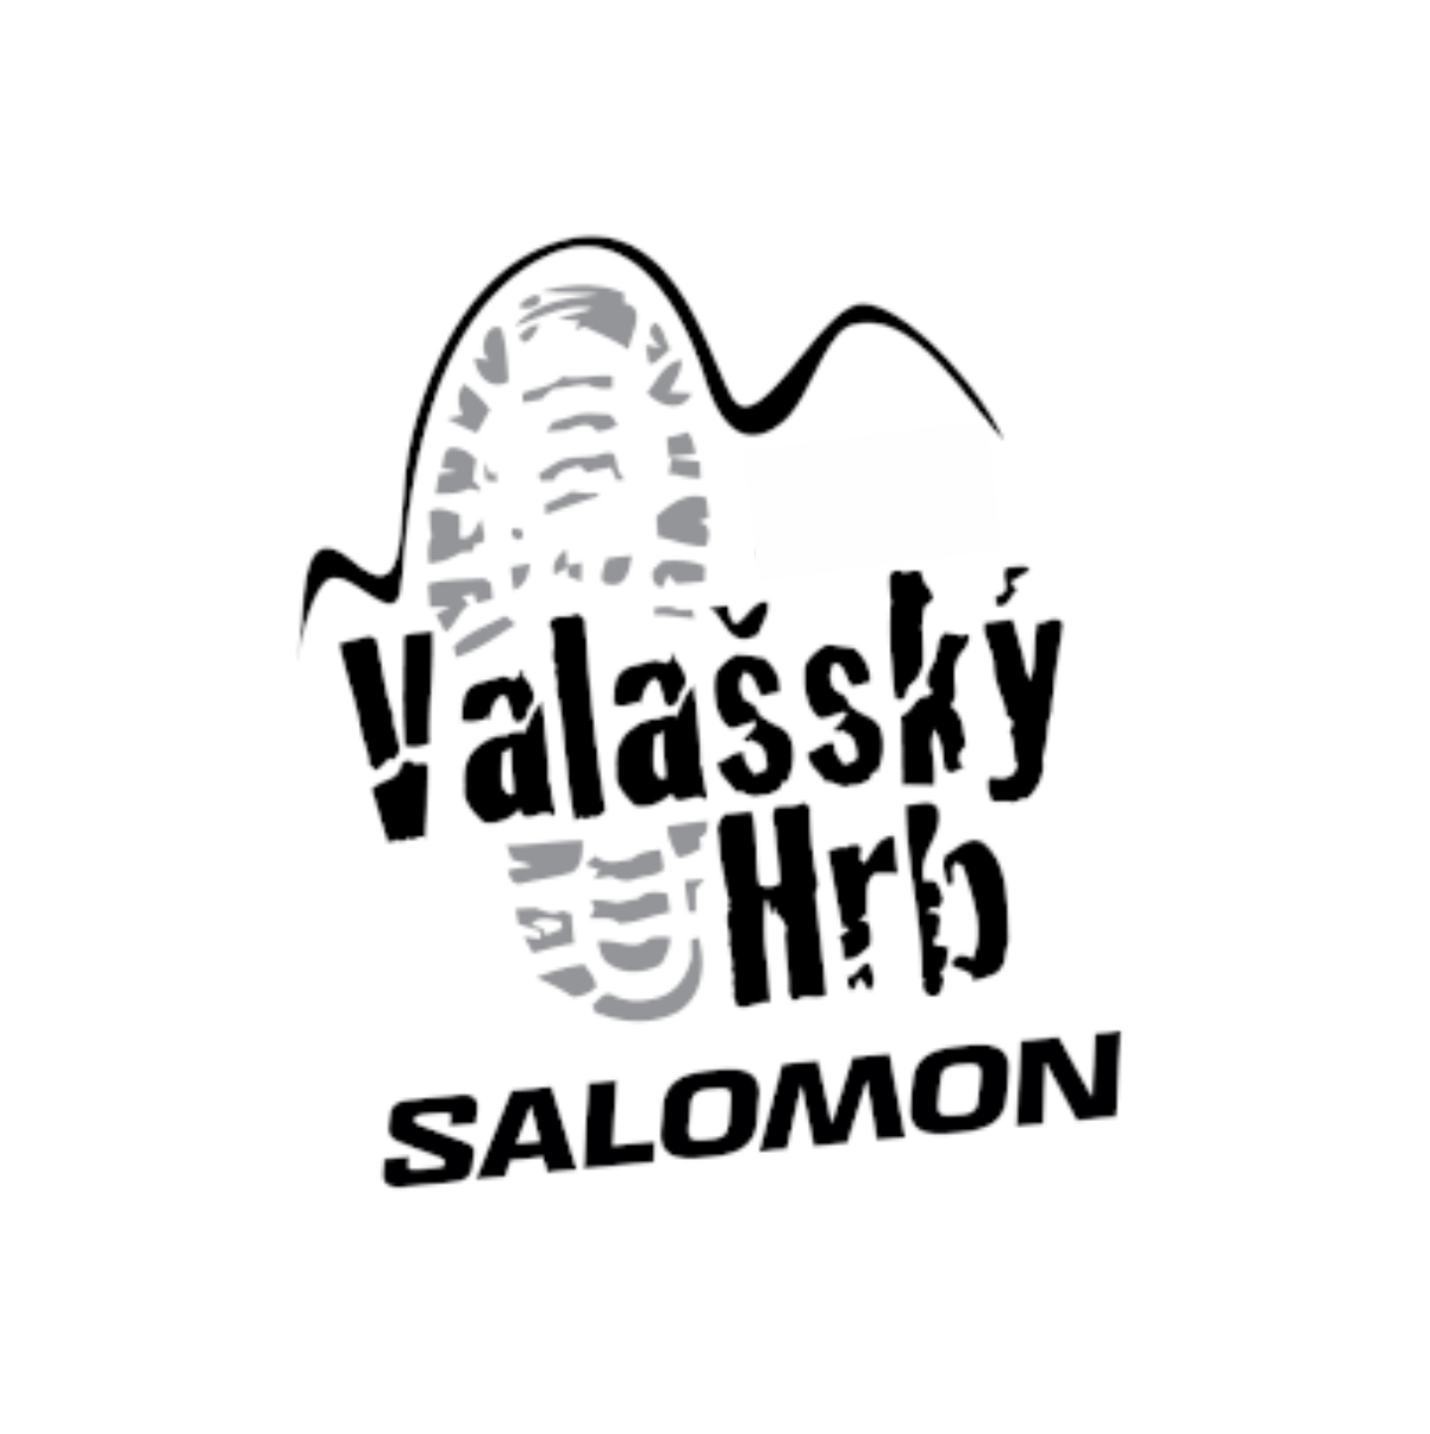 Logo-Valassky-Hrb